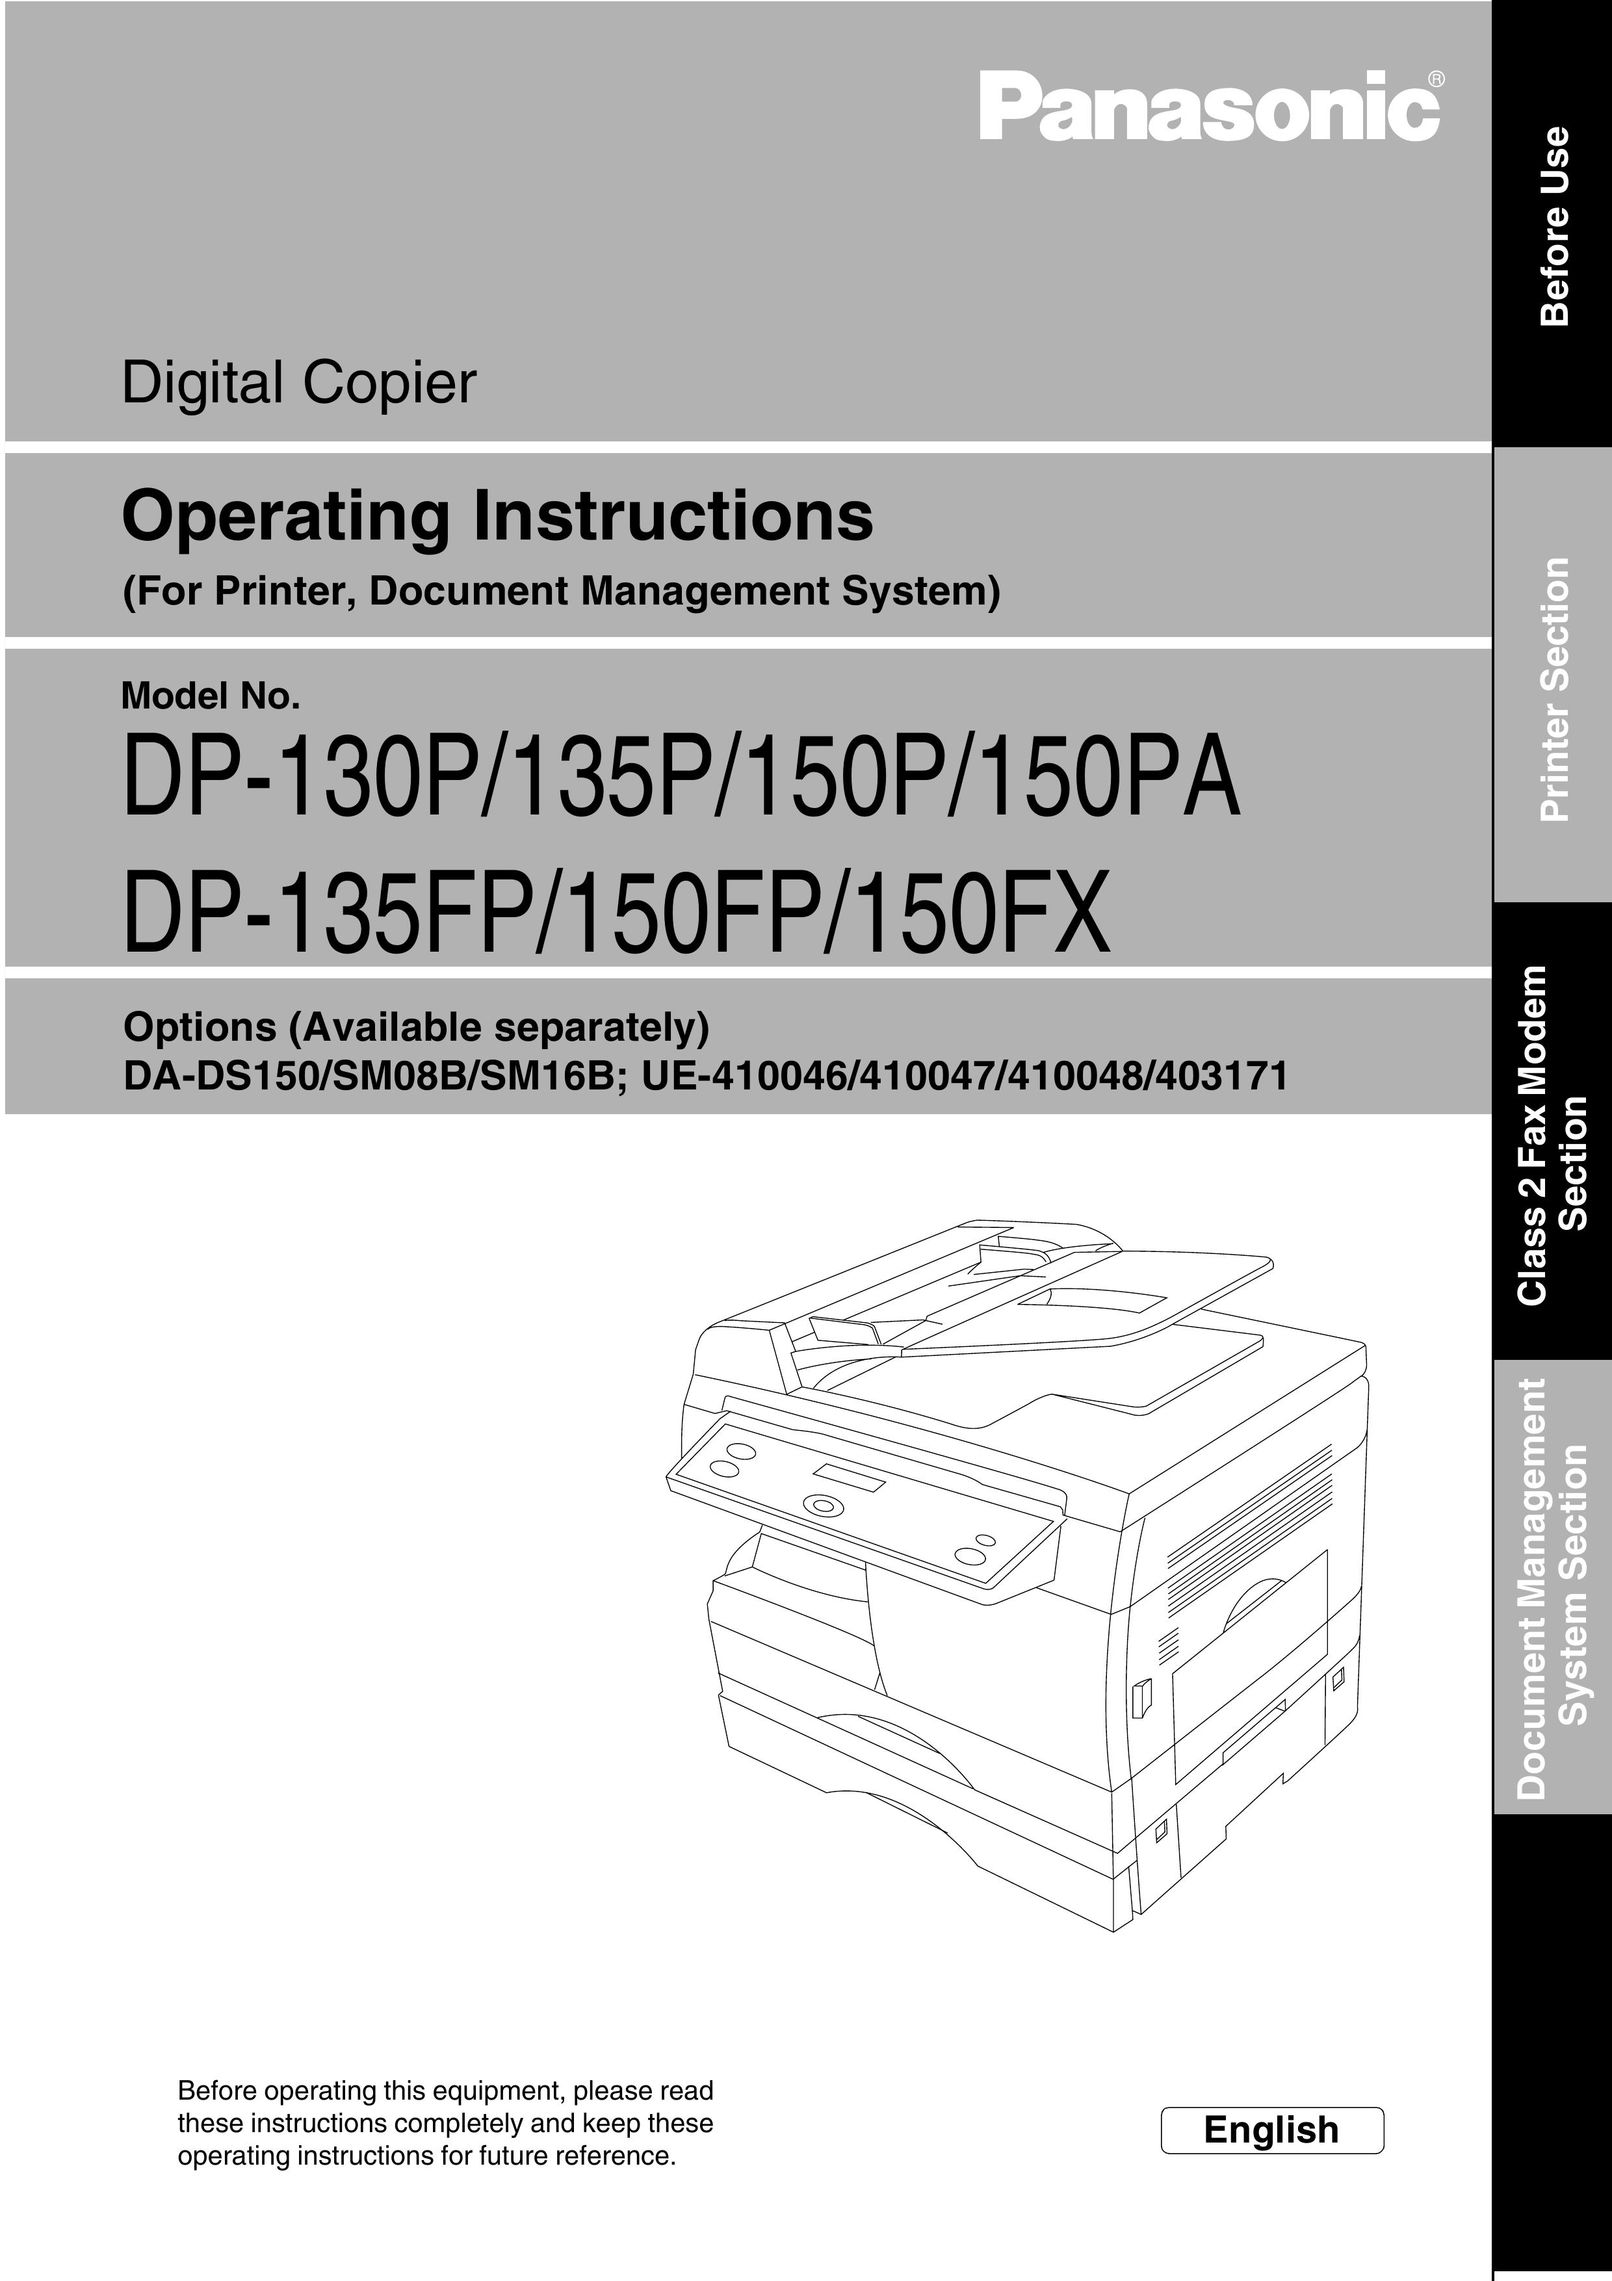 Panasonic 150PA All in One Printer User Manual